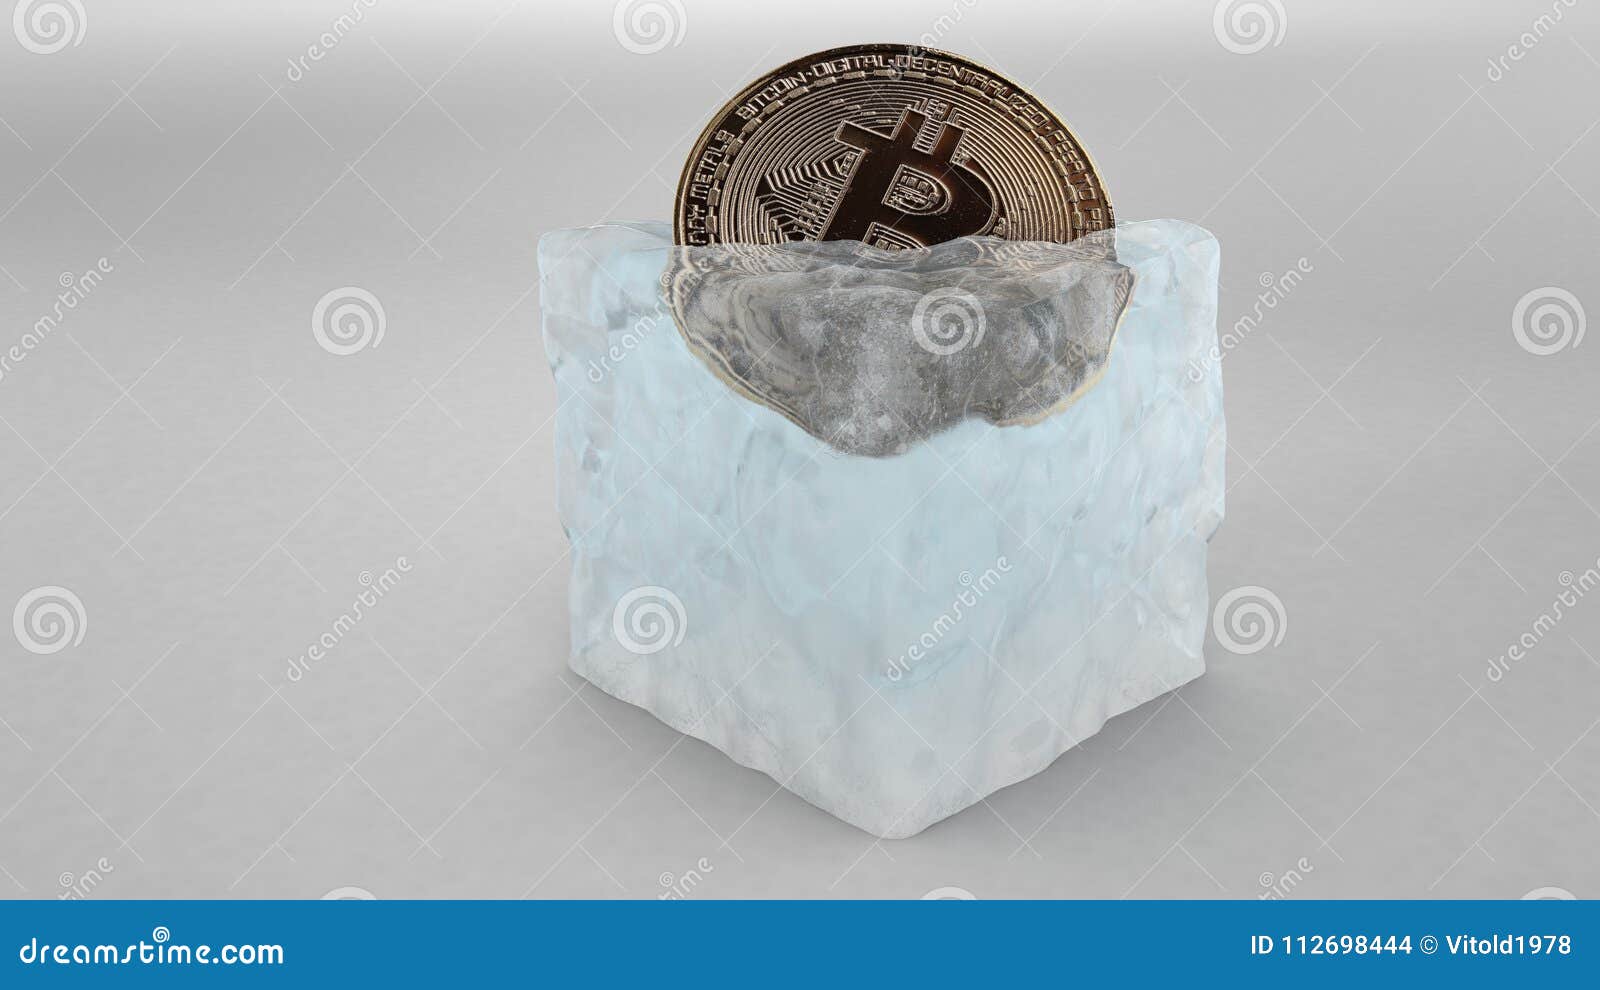 ice bitcoin